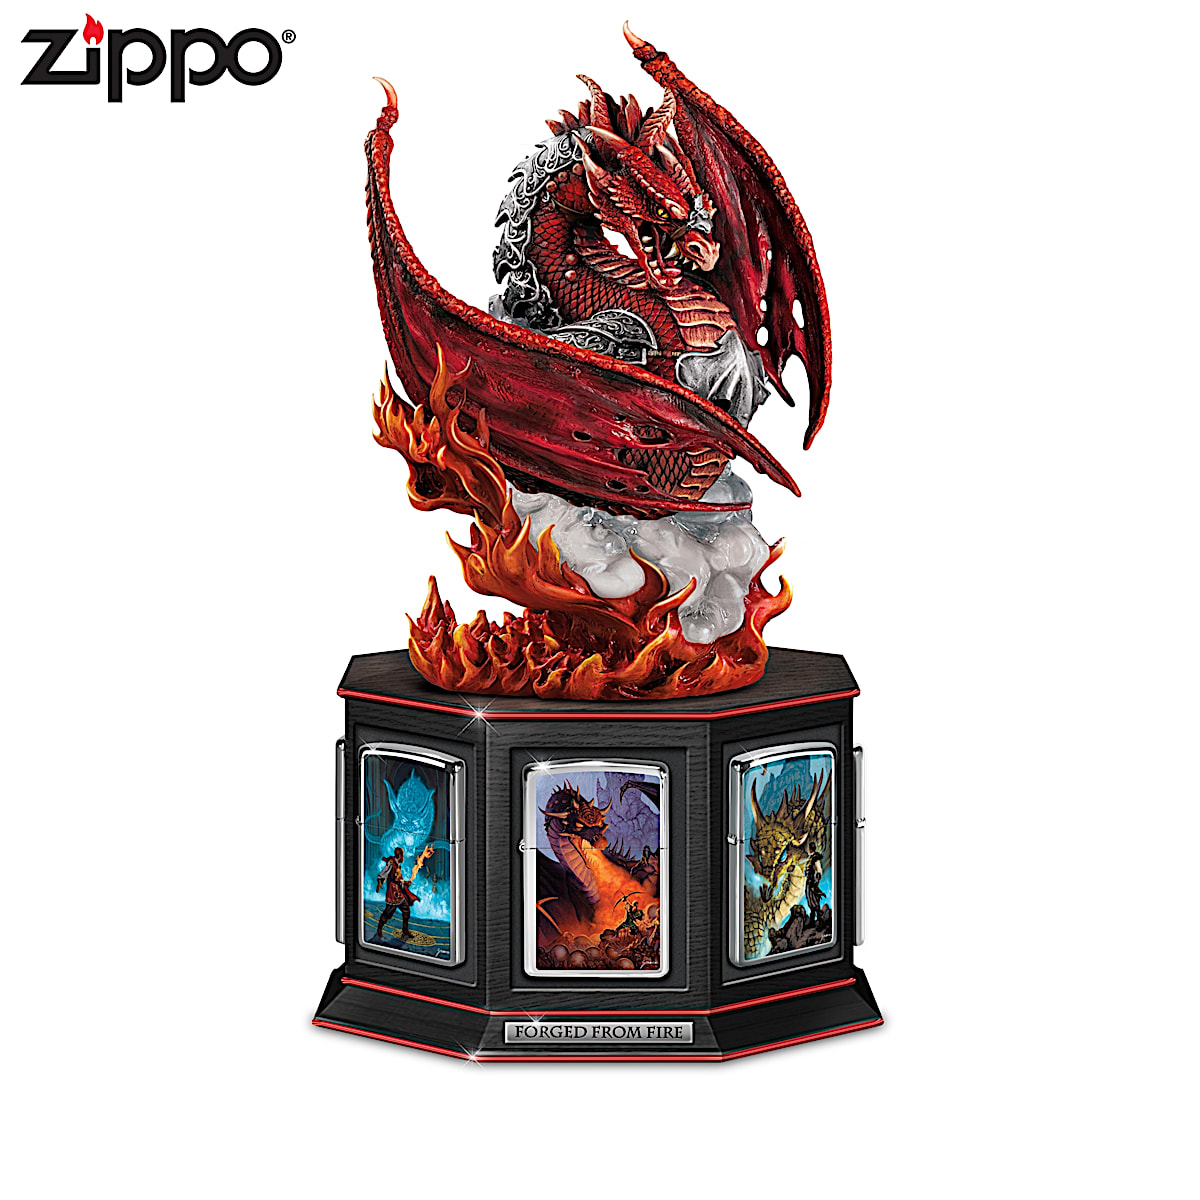 Dragon Art Zippo® Collection With Lighted Dragon Display